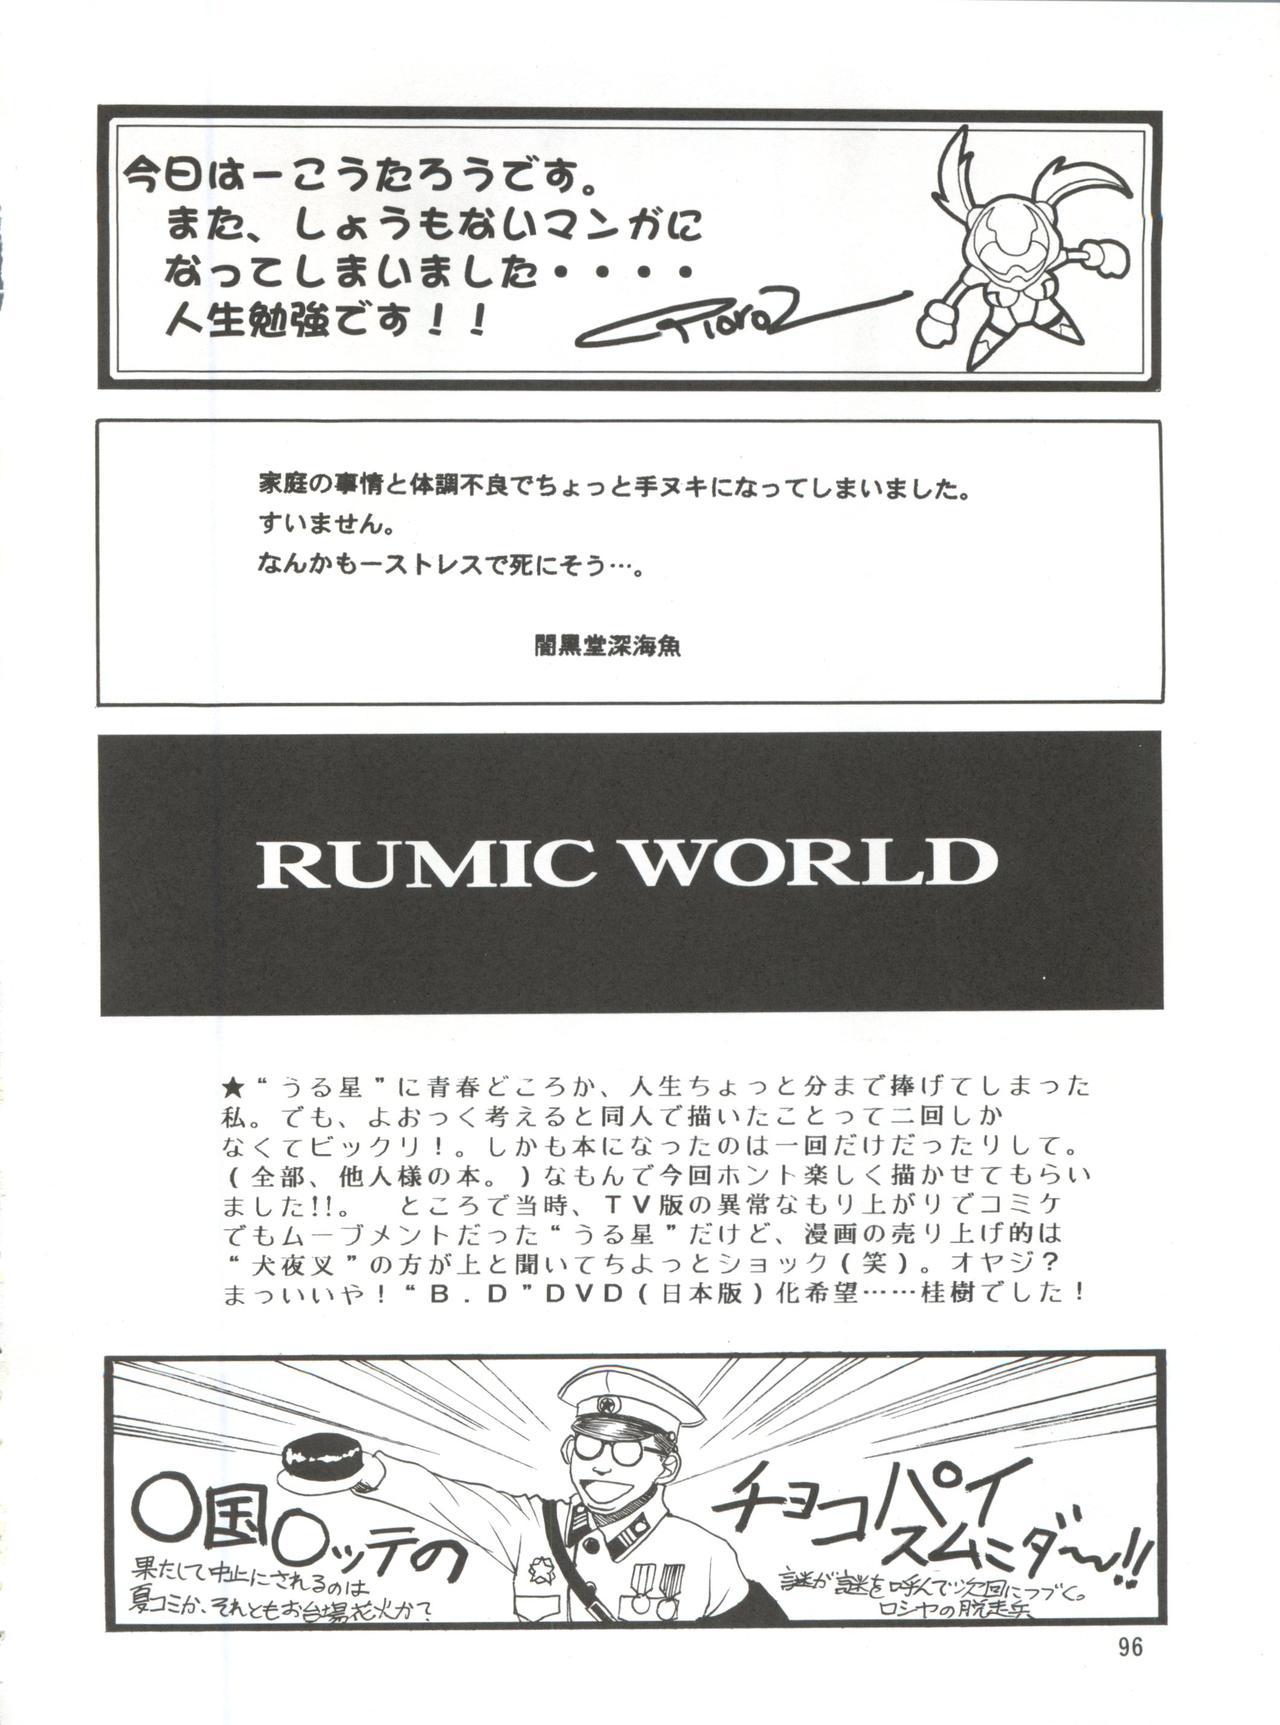 NEXT Climax Magazine 7 - RUMIC WORLD 95